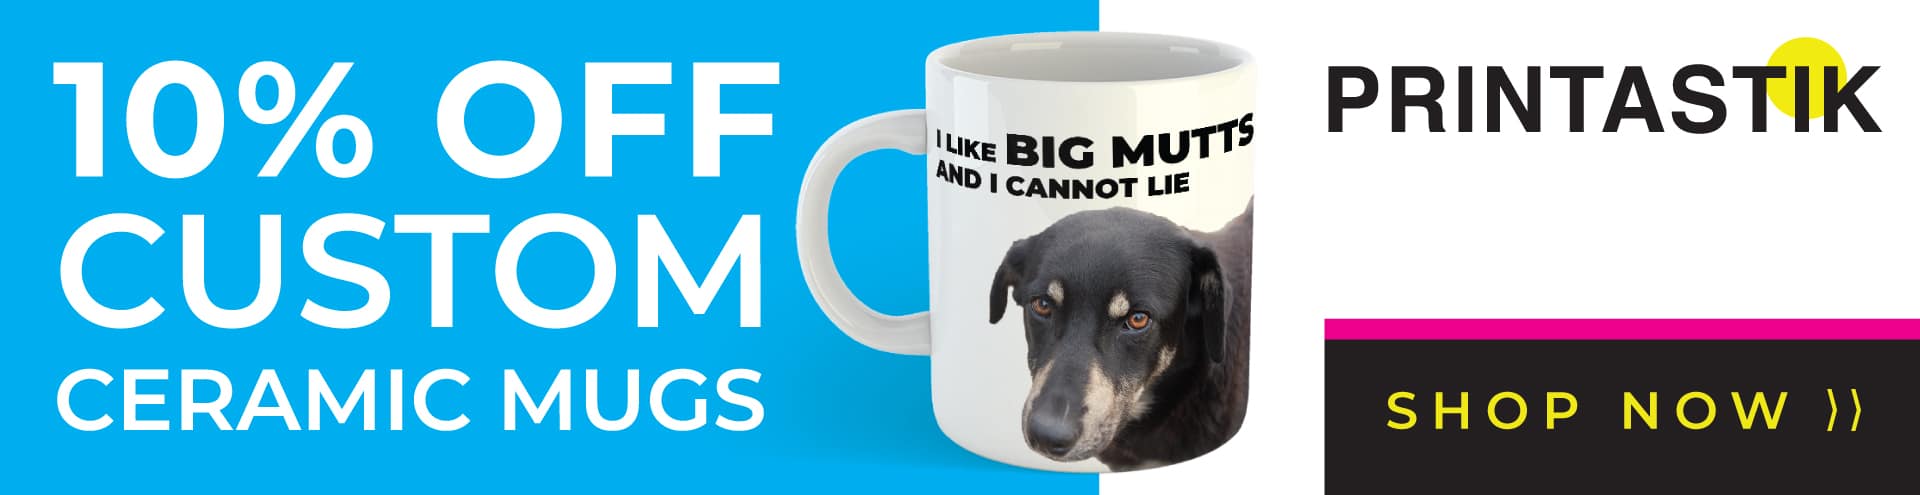 10% off custom mugs promotion